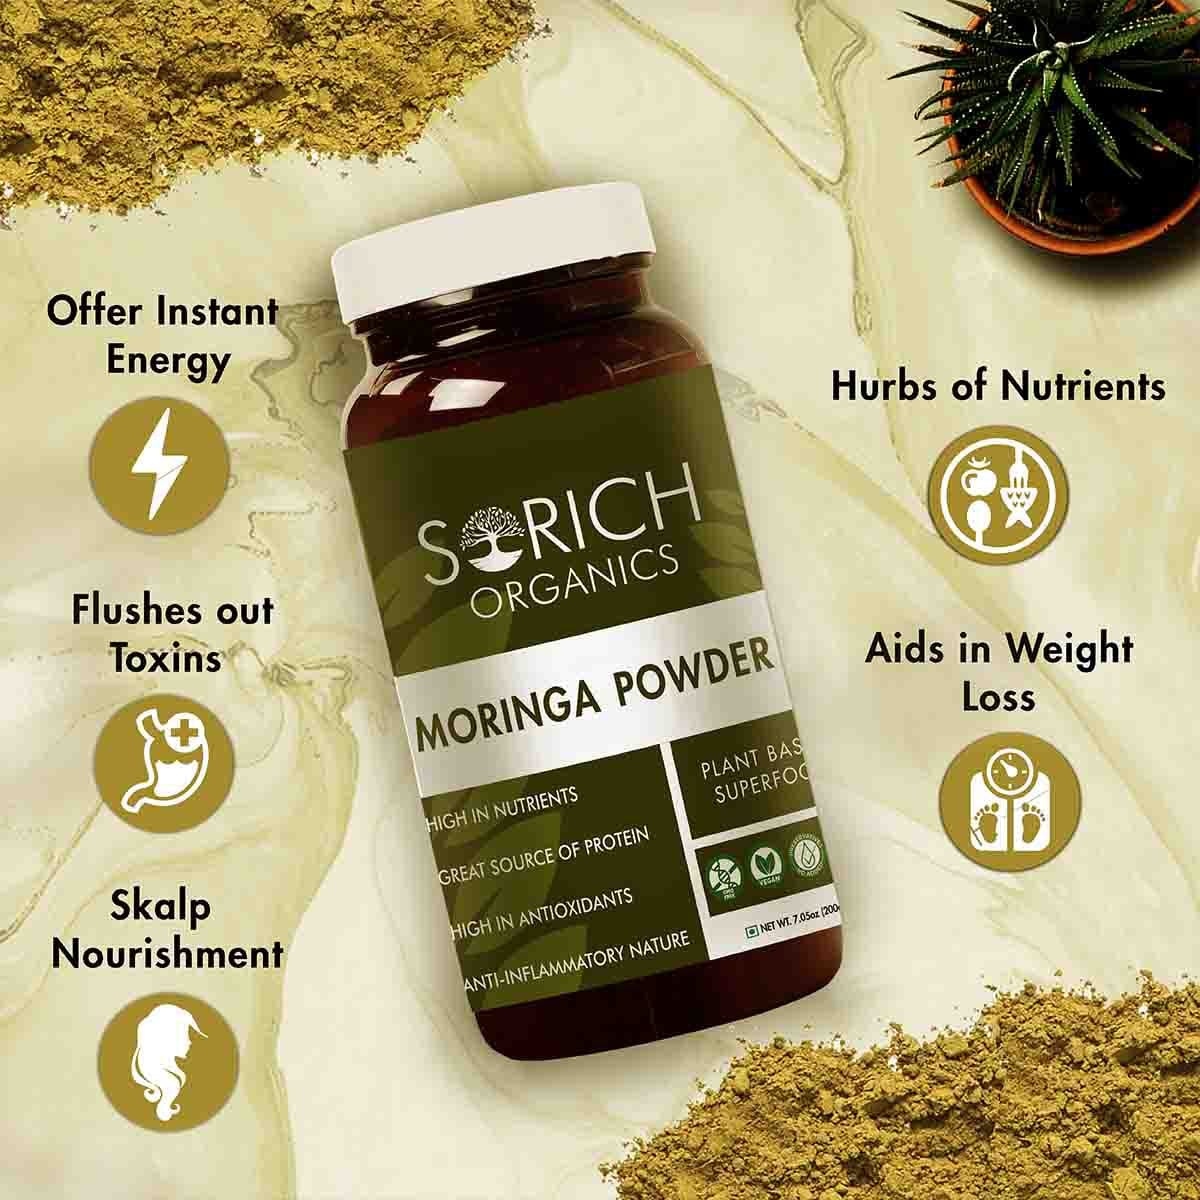 moringa powder benefits